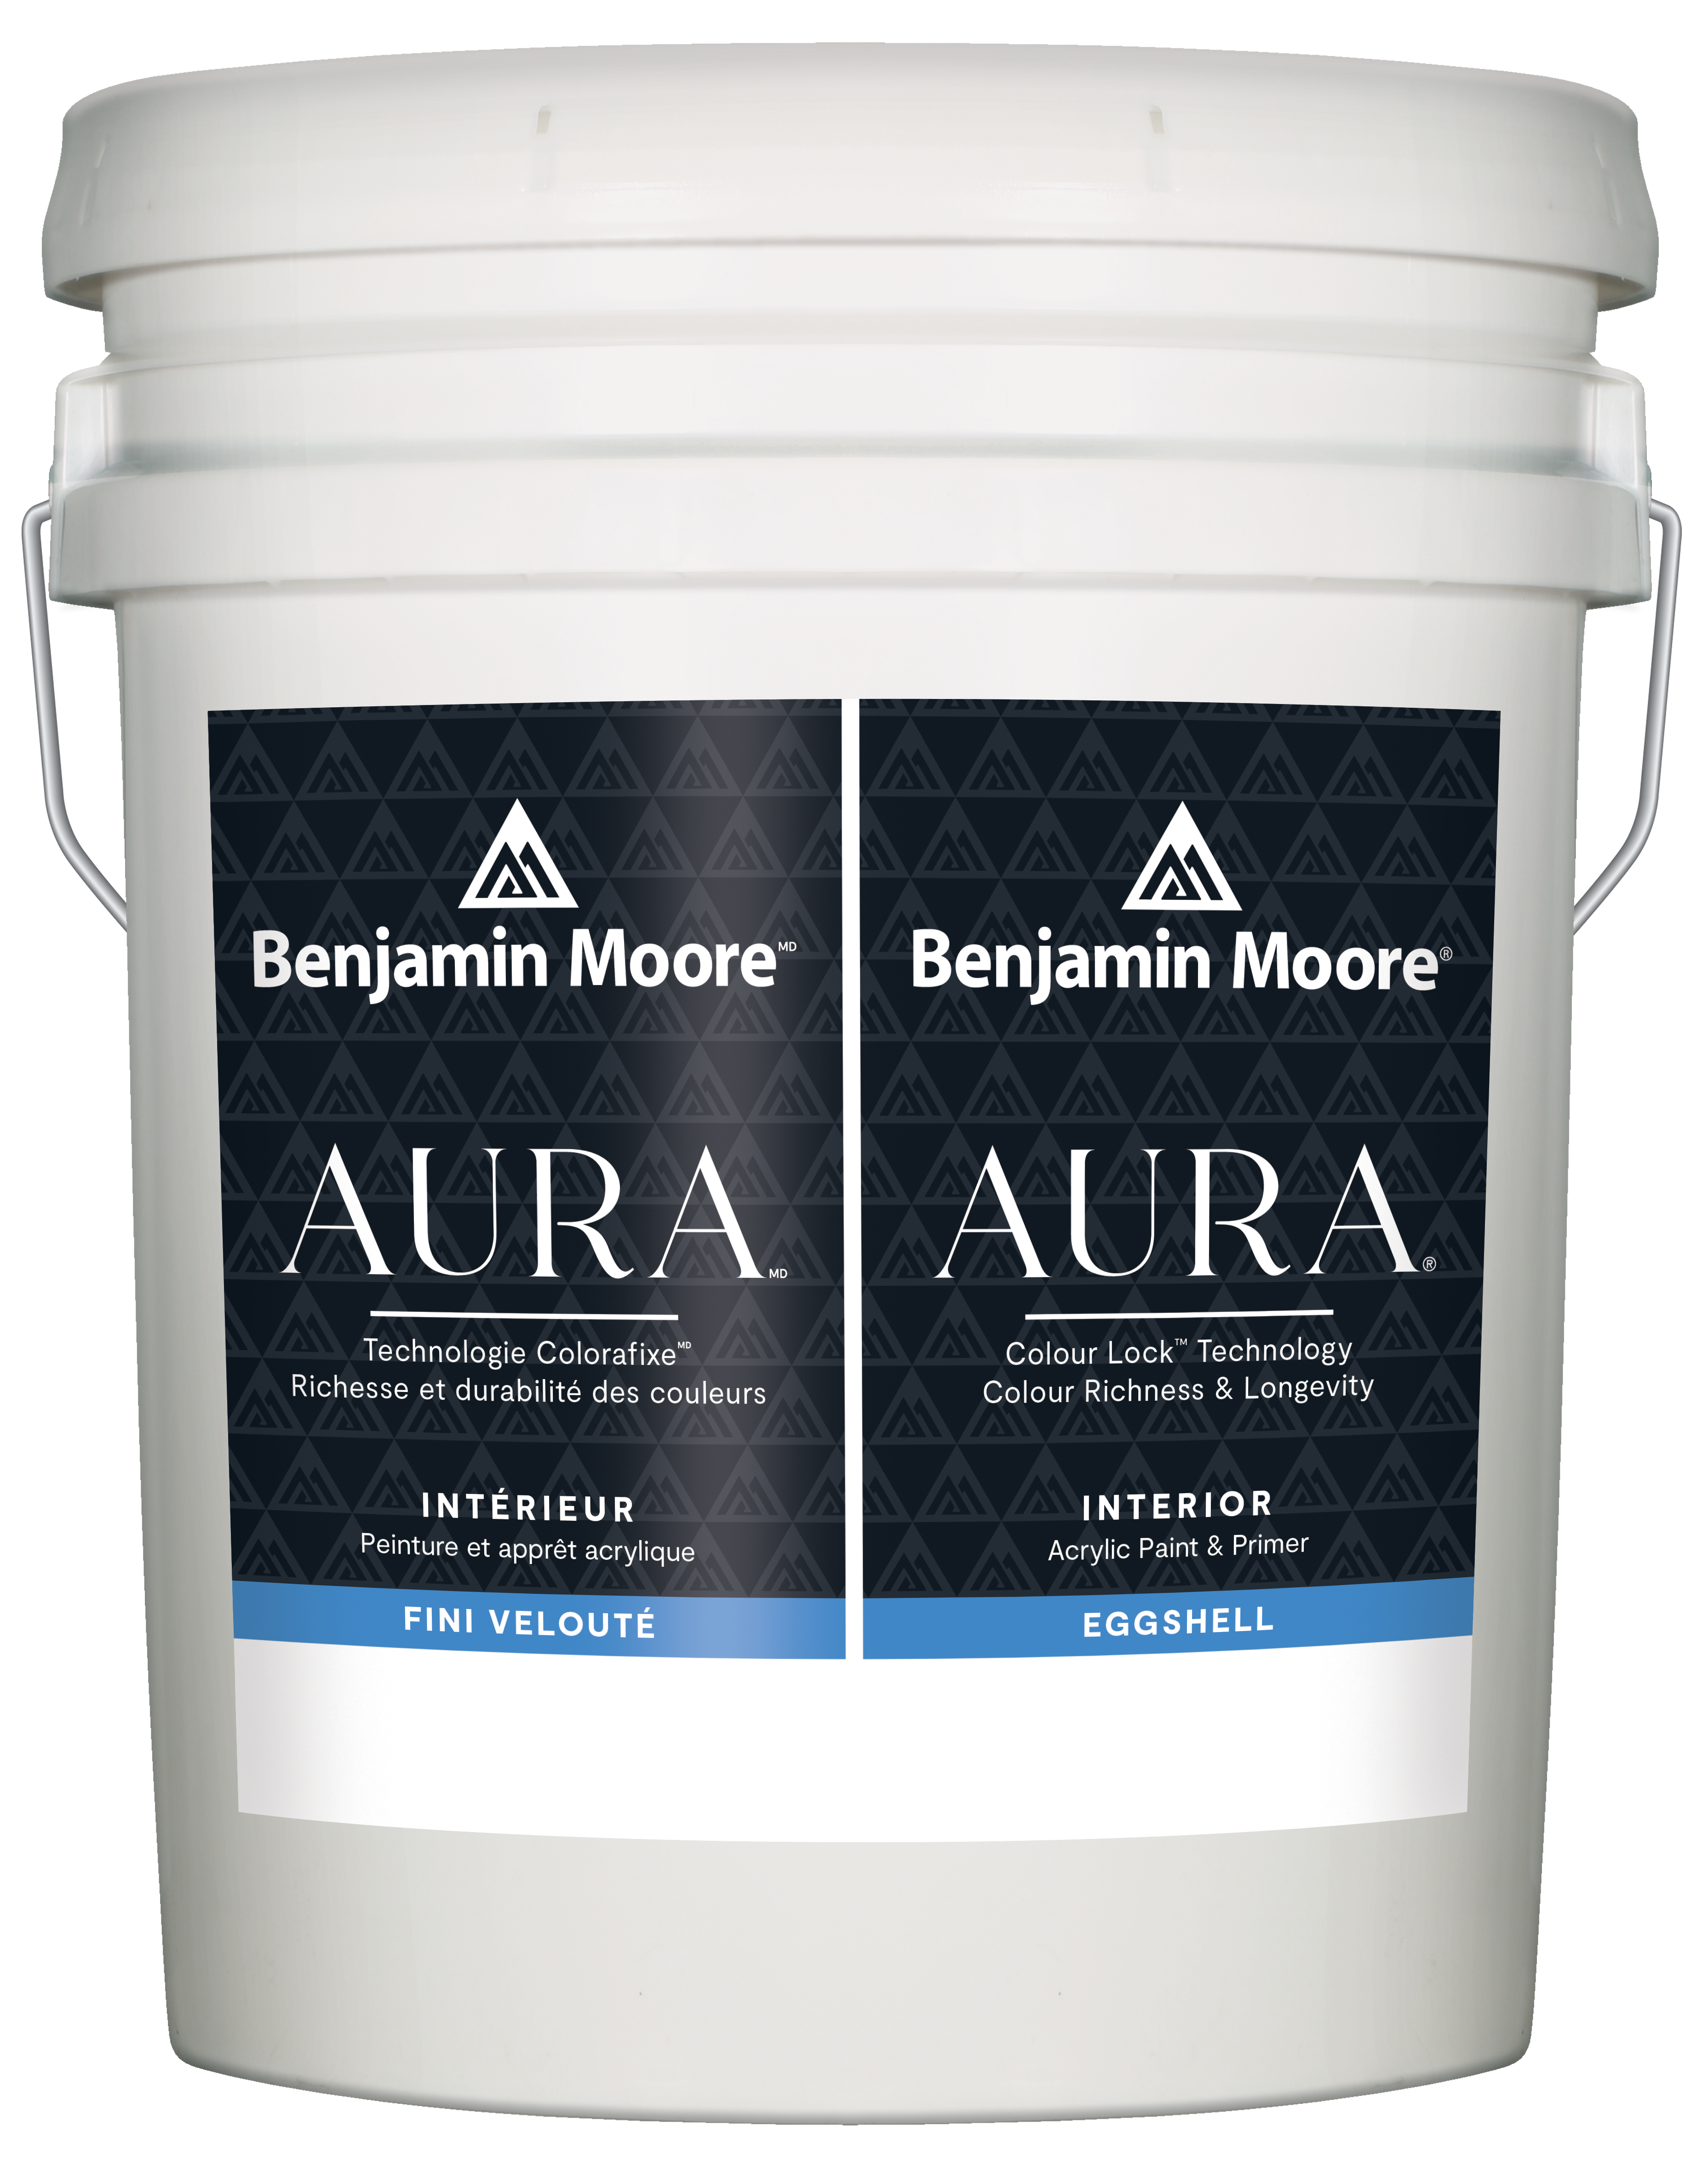 Benjamin Moore AURA® Eggshell finish paint bucket with branding visible